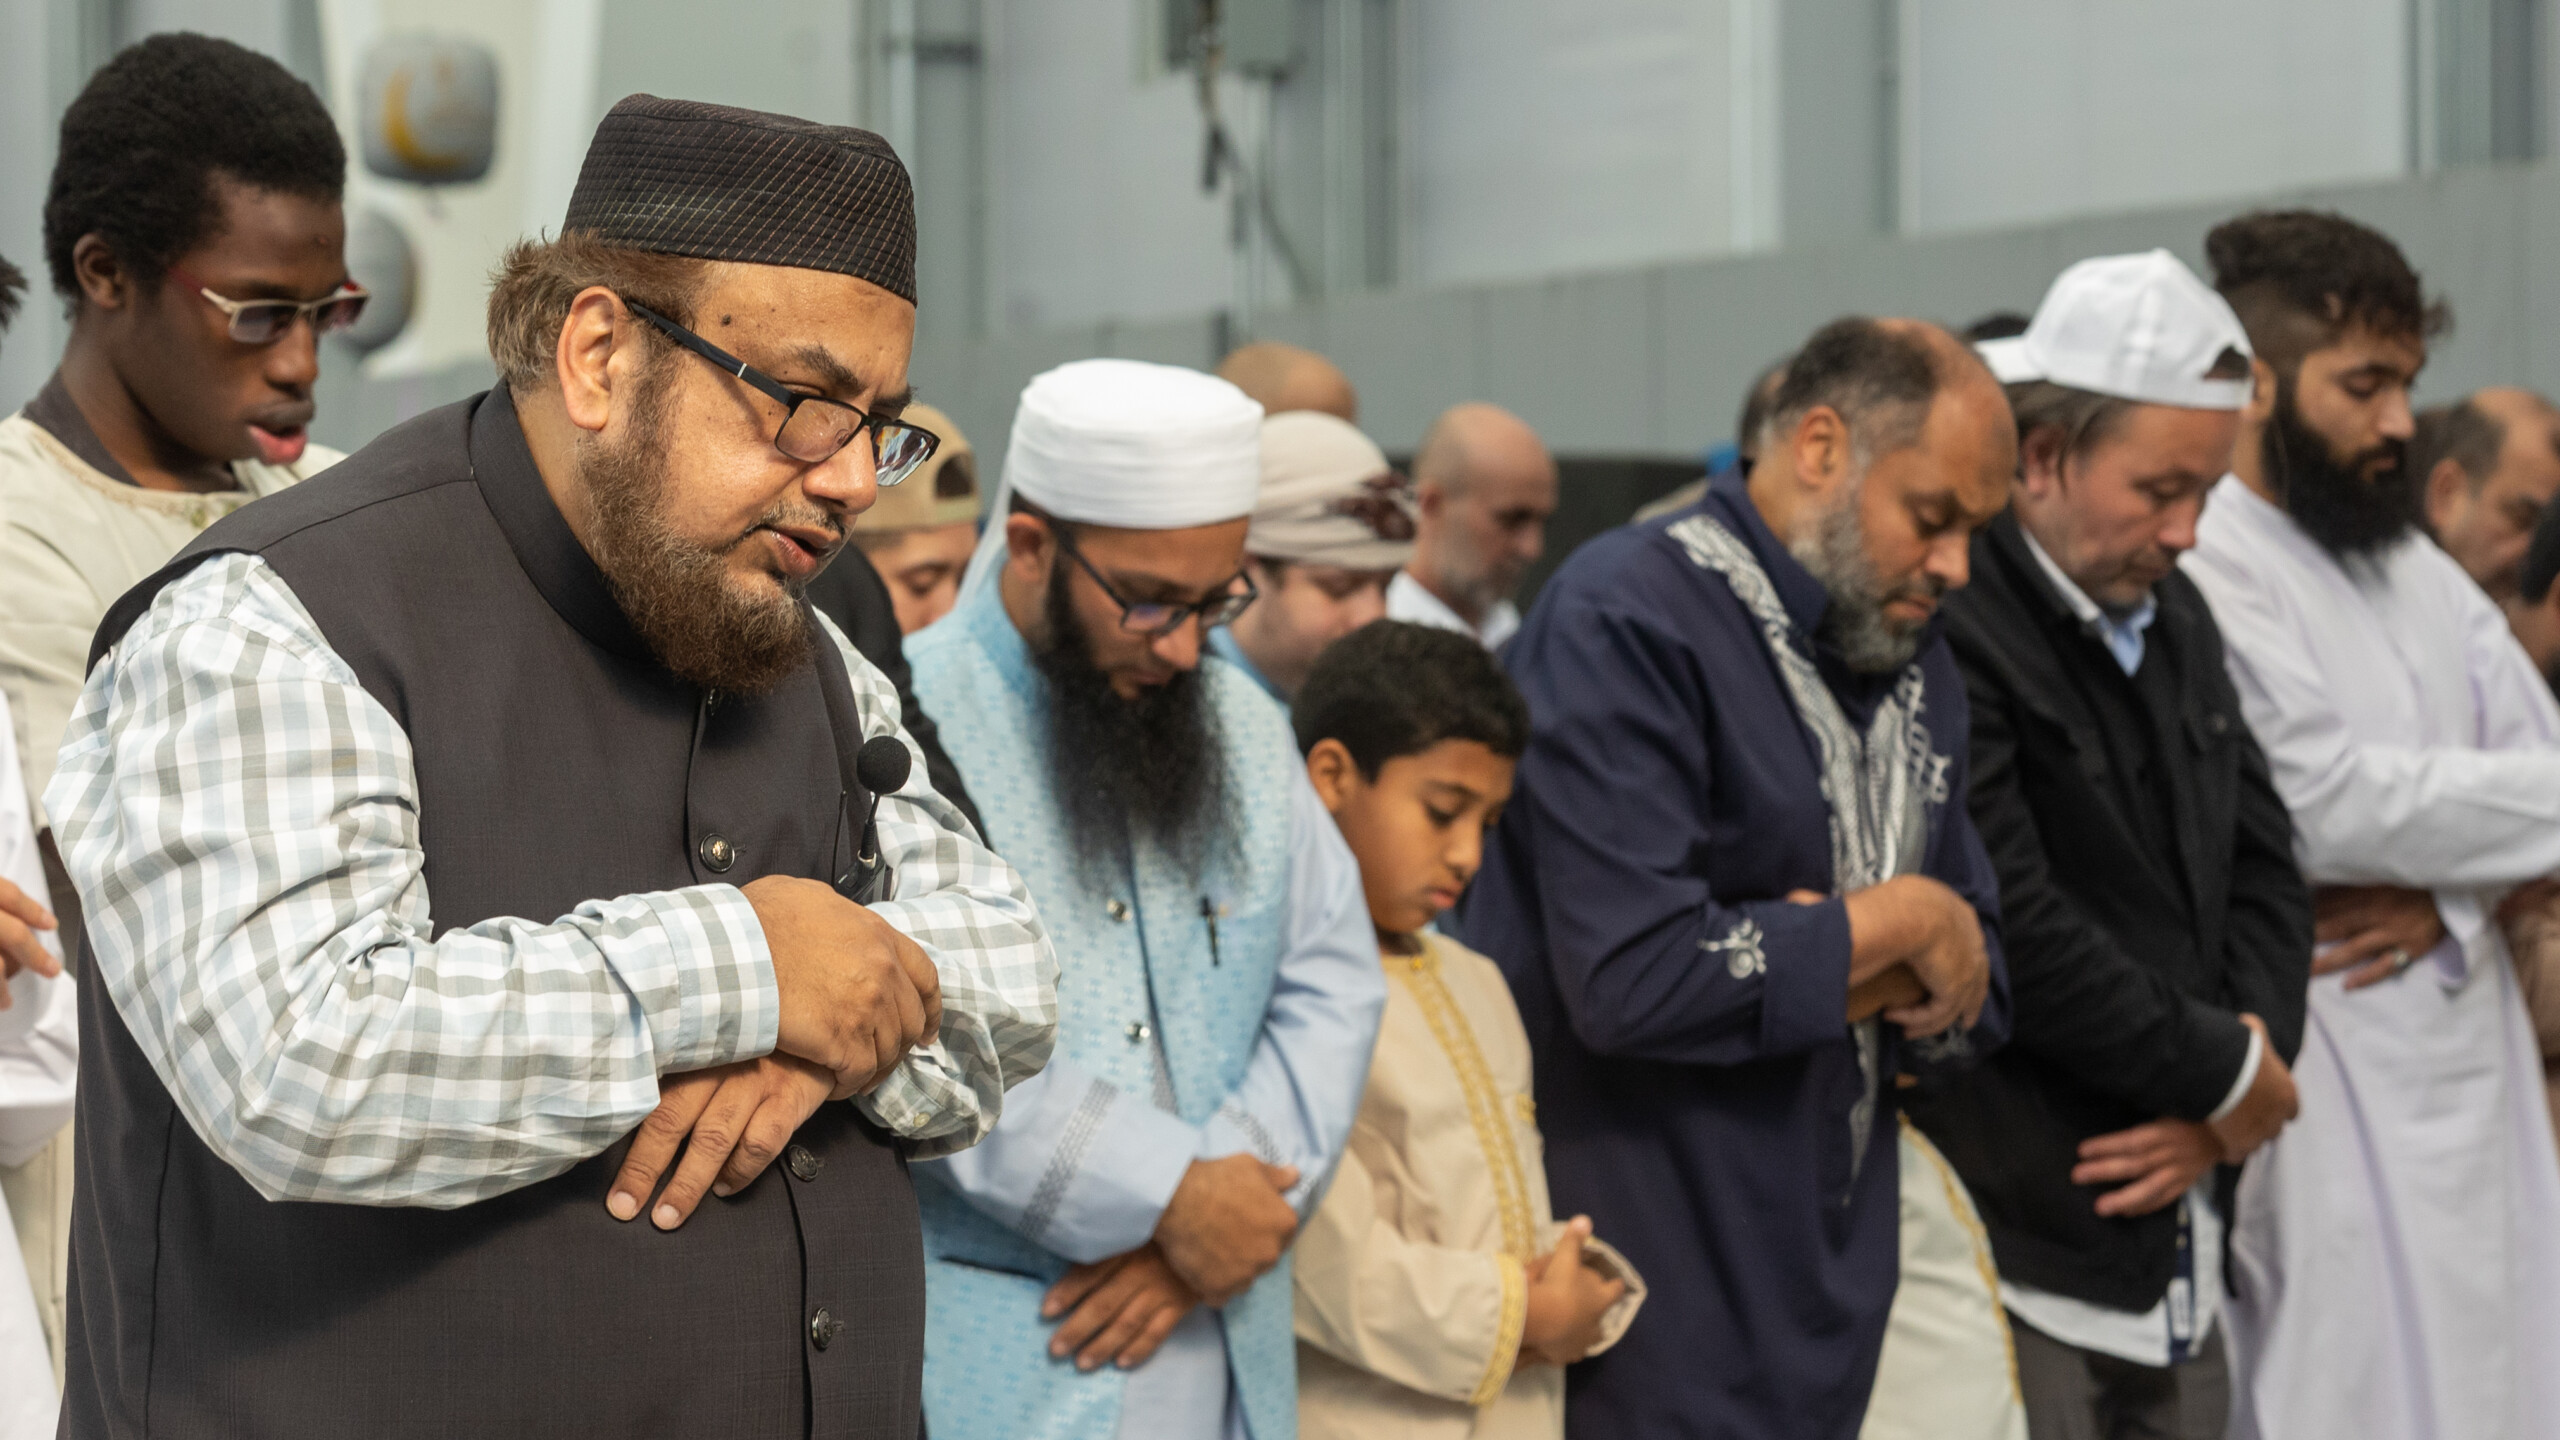 Featured image for “Muslims celebrate Eid al-Fitr at Jacksonville Jaguars’ Flex Field”